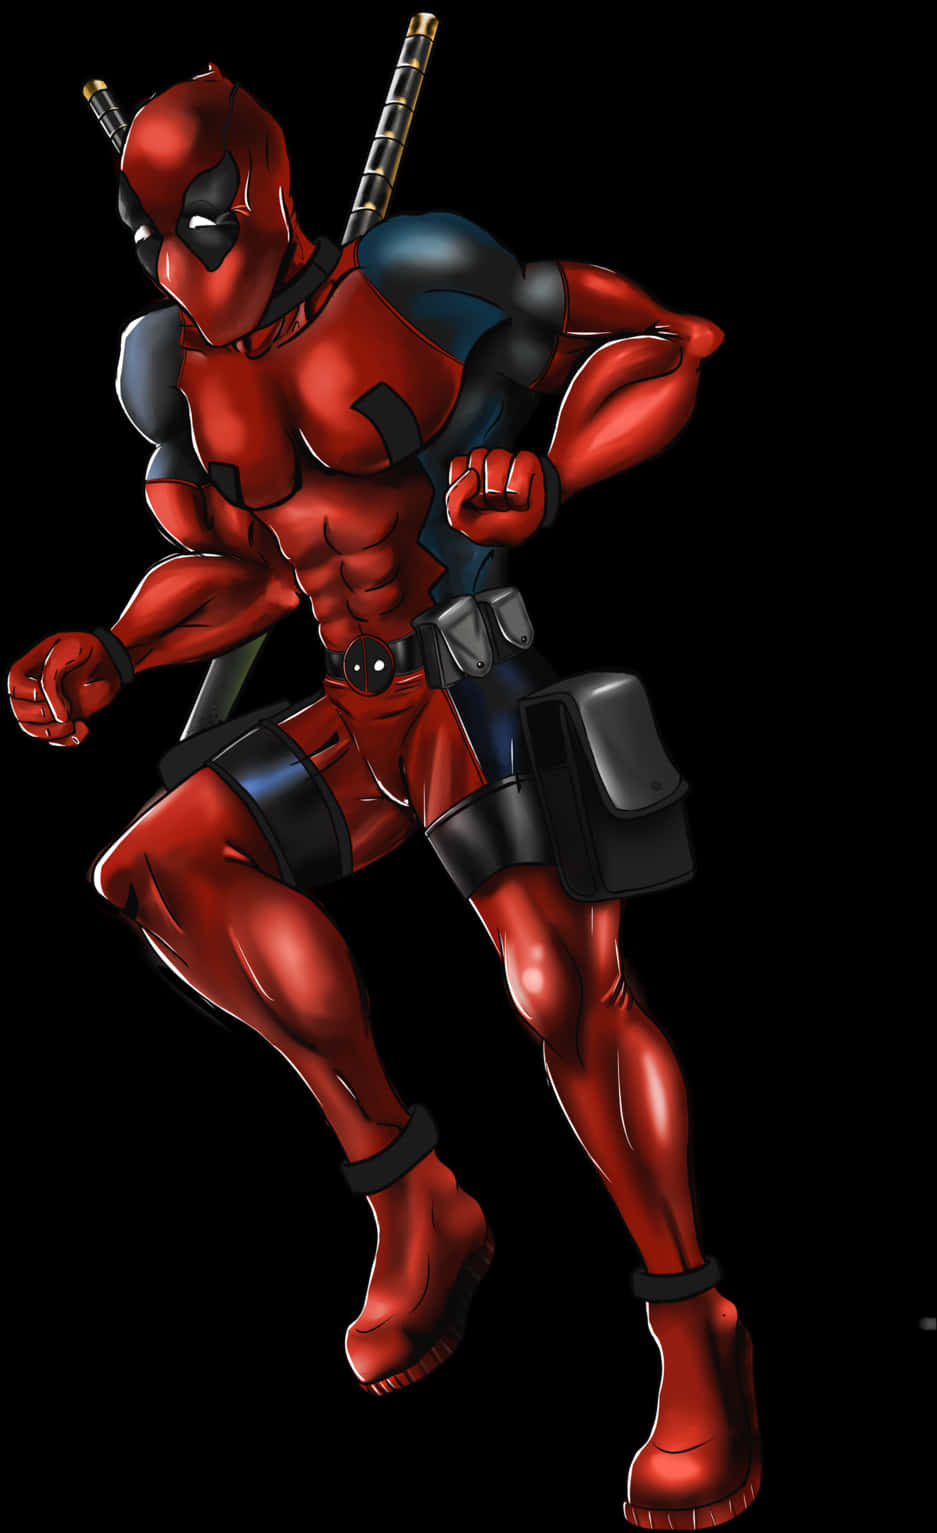 A Cartoon Of A Man In A Red Garment